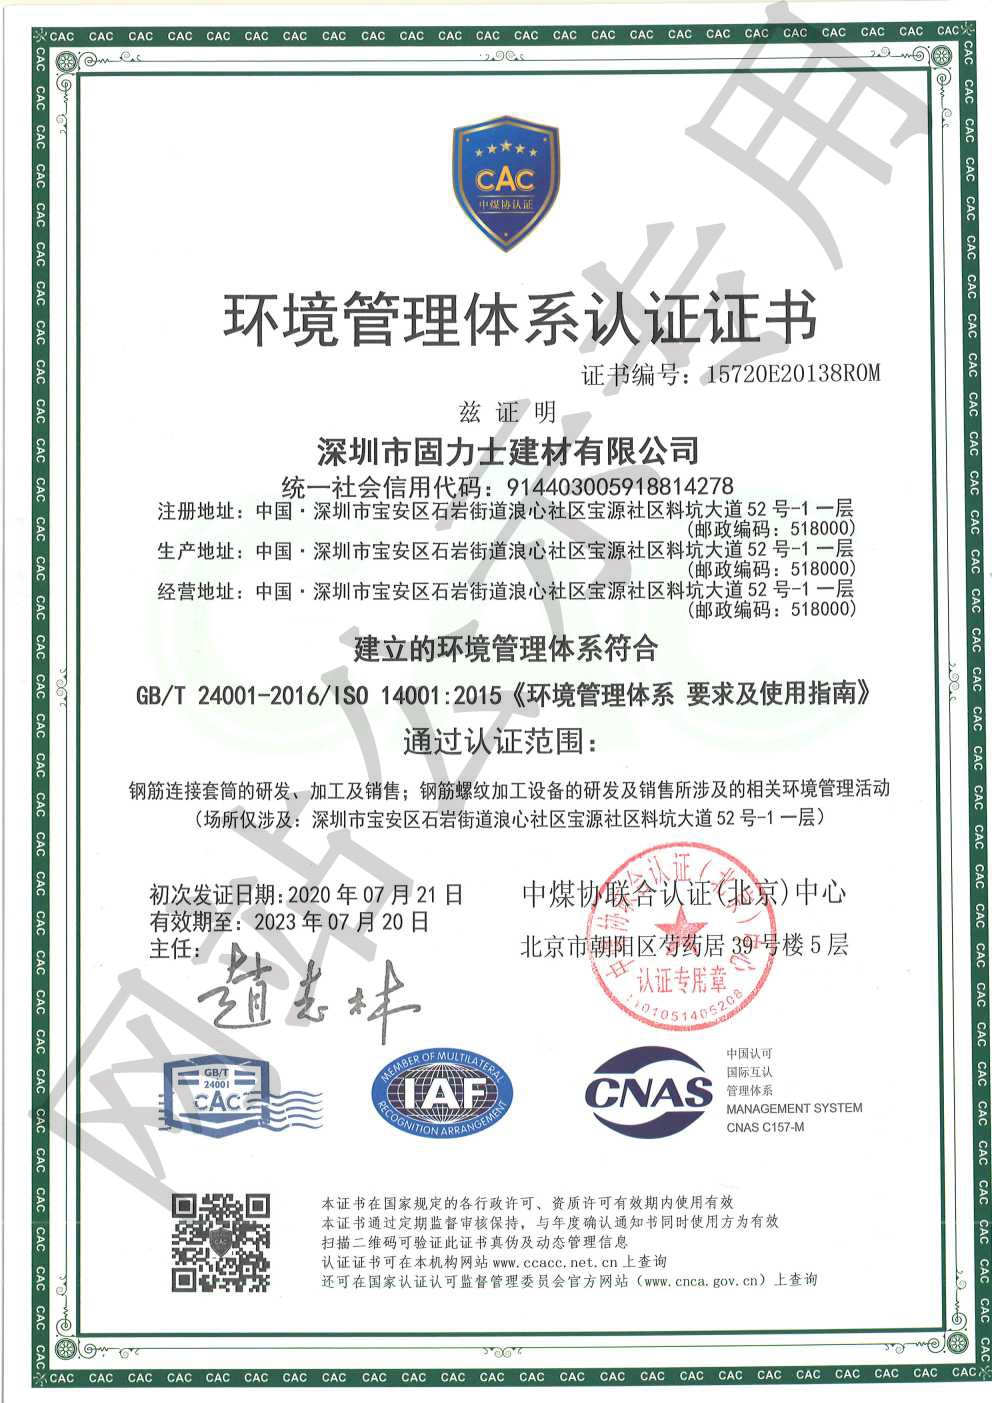 翁田镇ISO14001证书